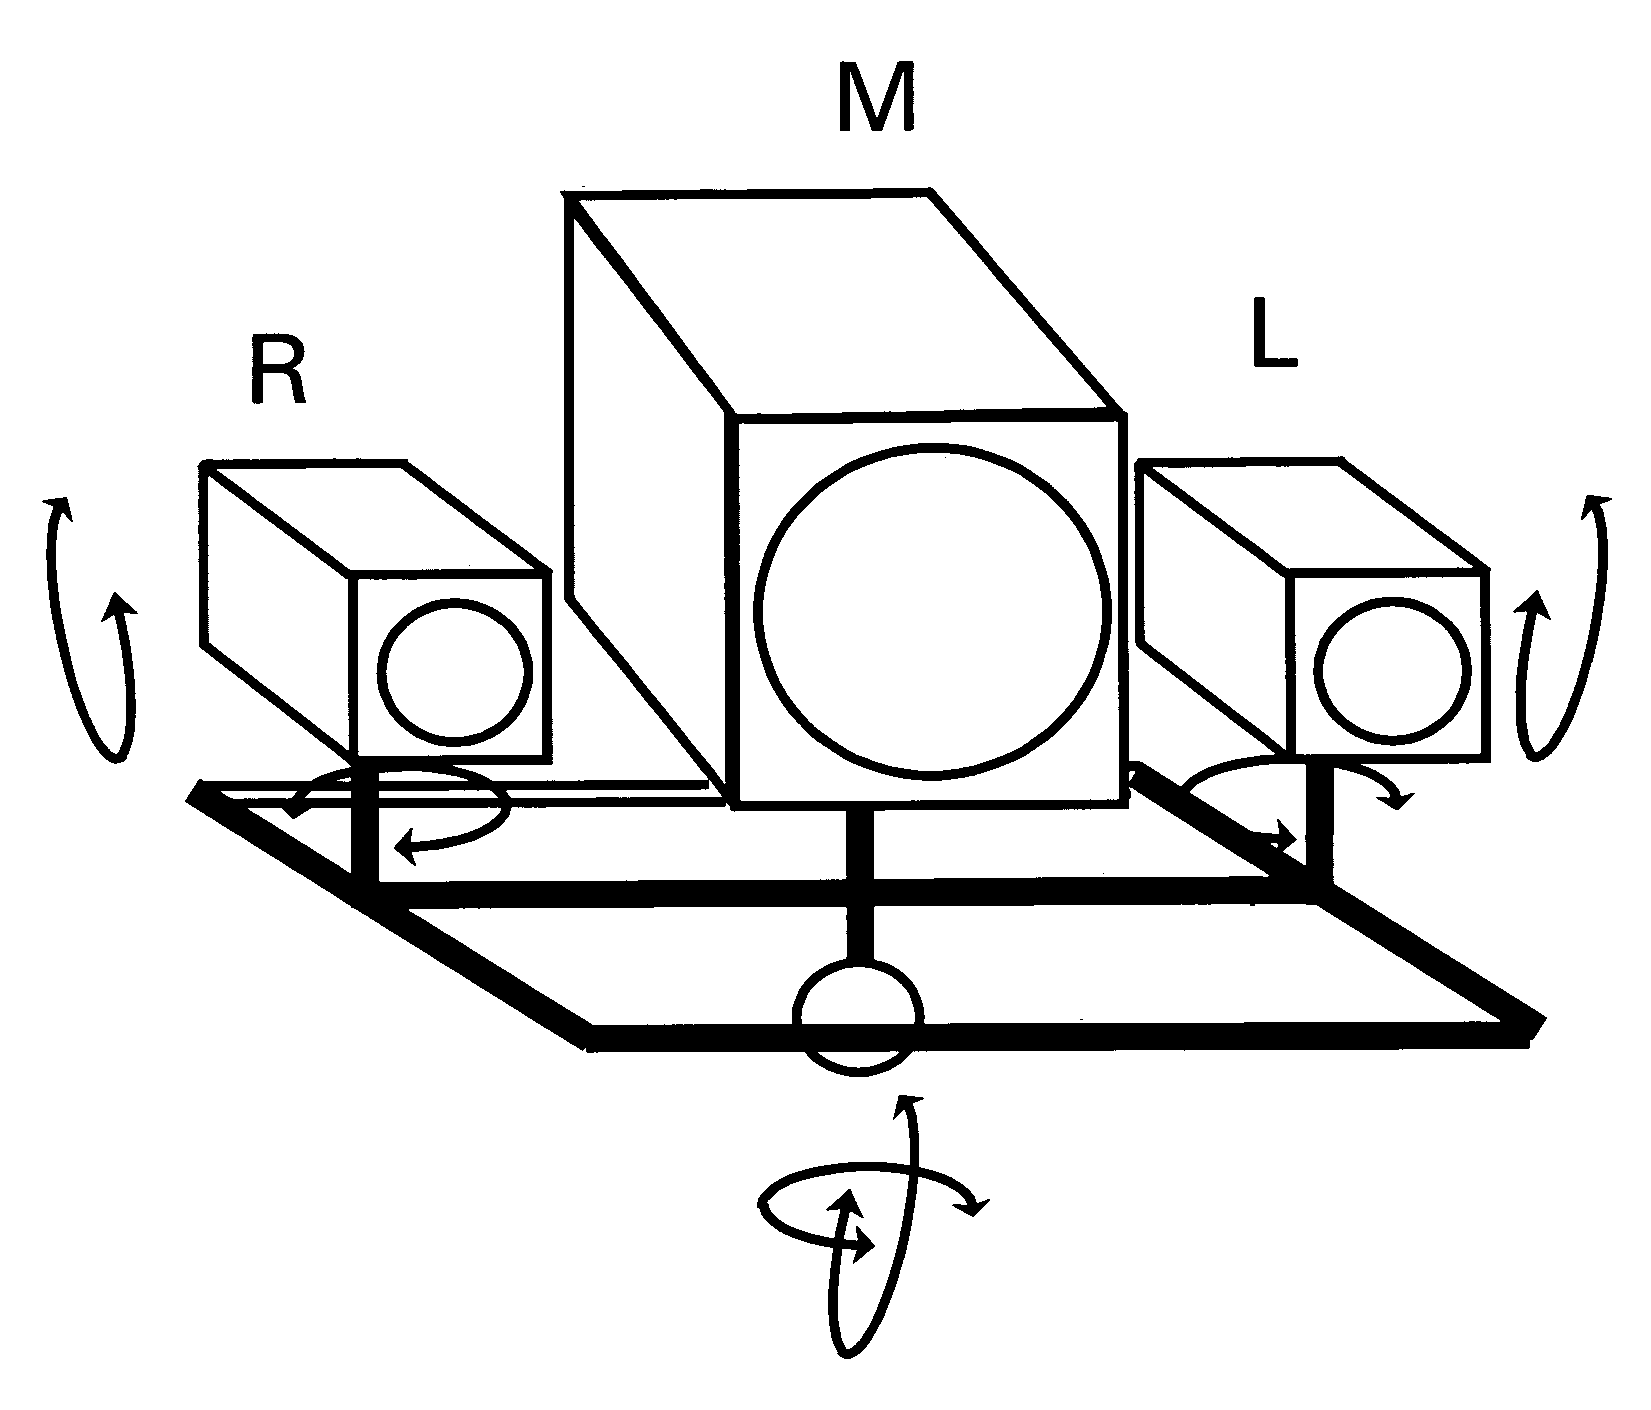 Three-dimensional camera adjunct